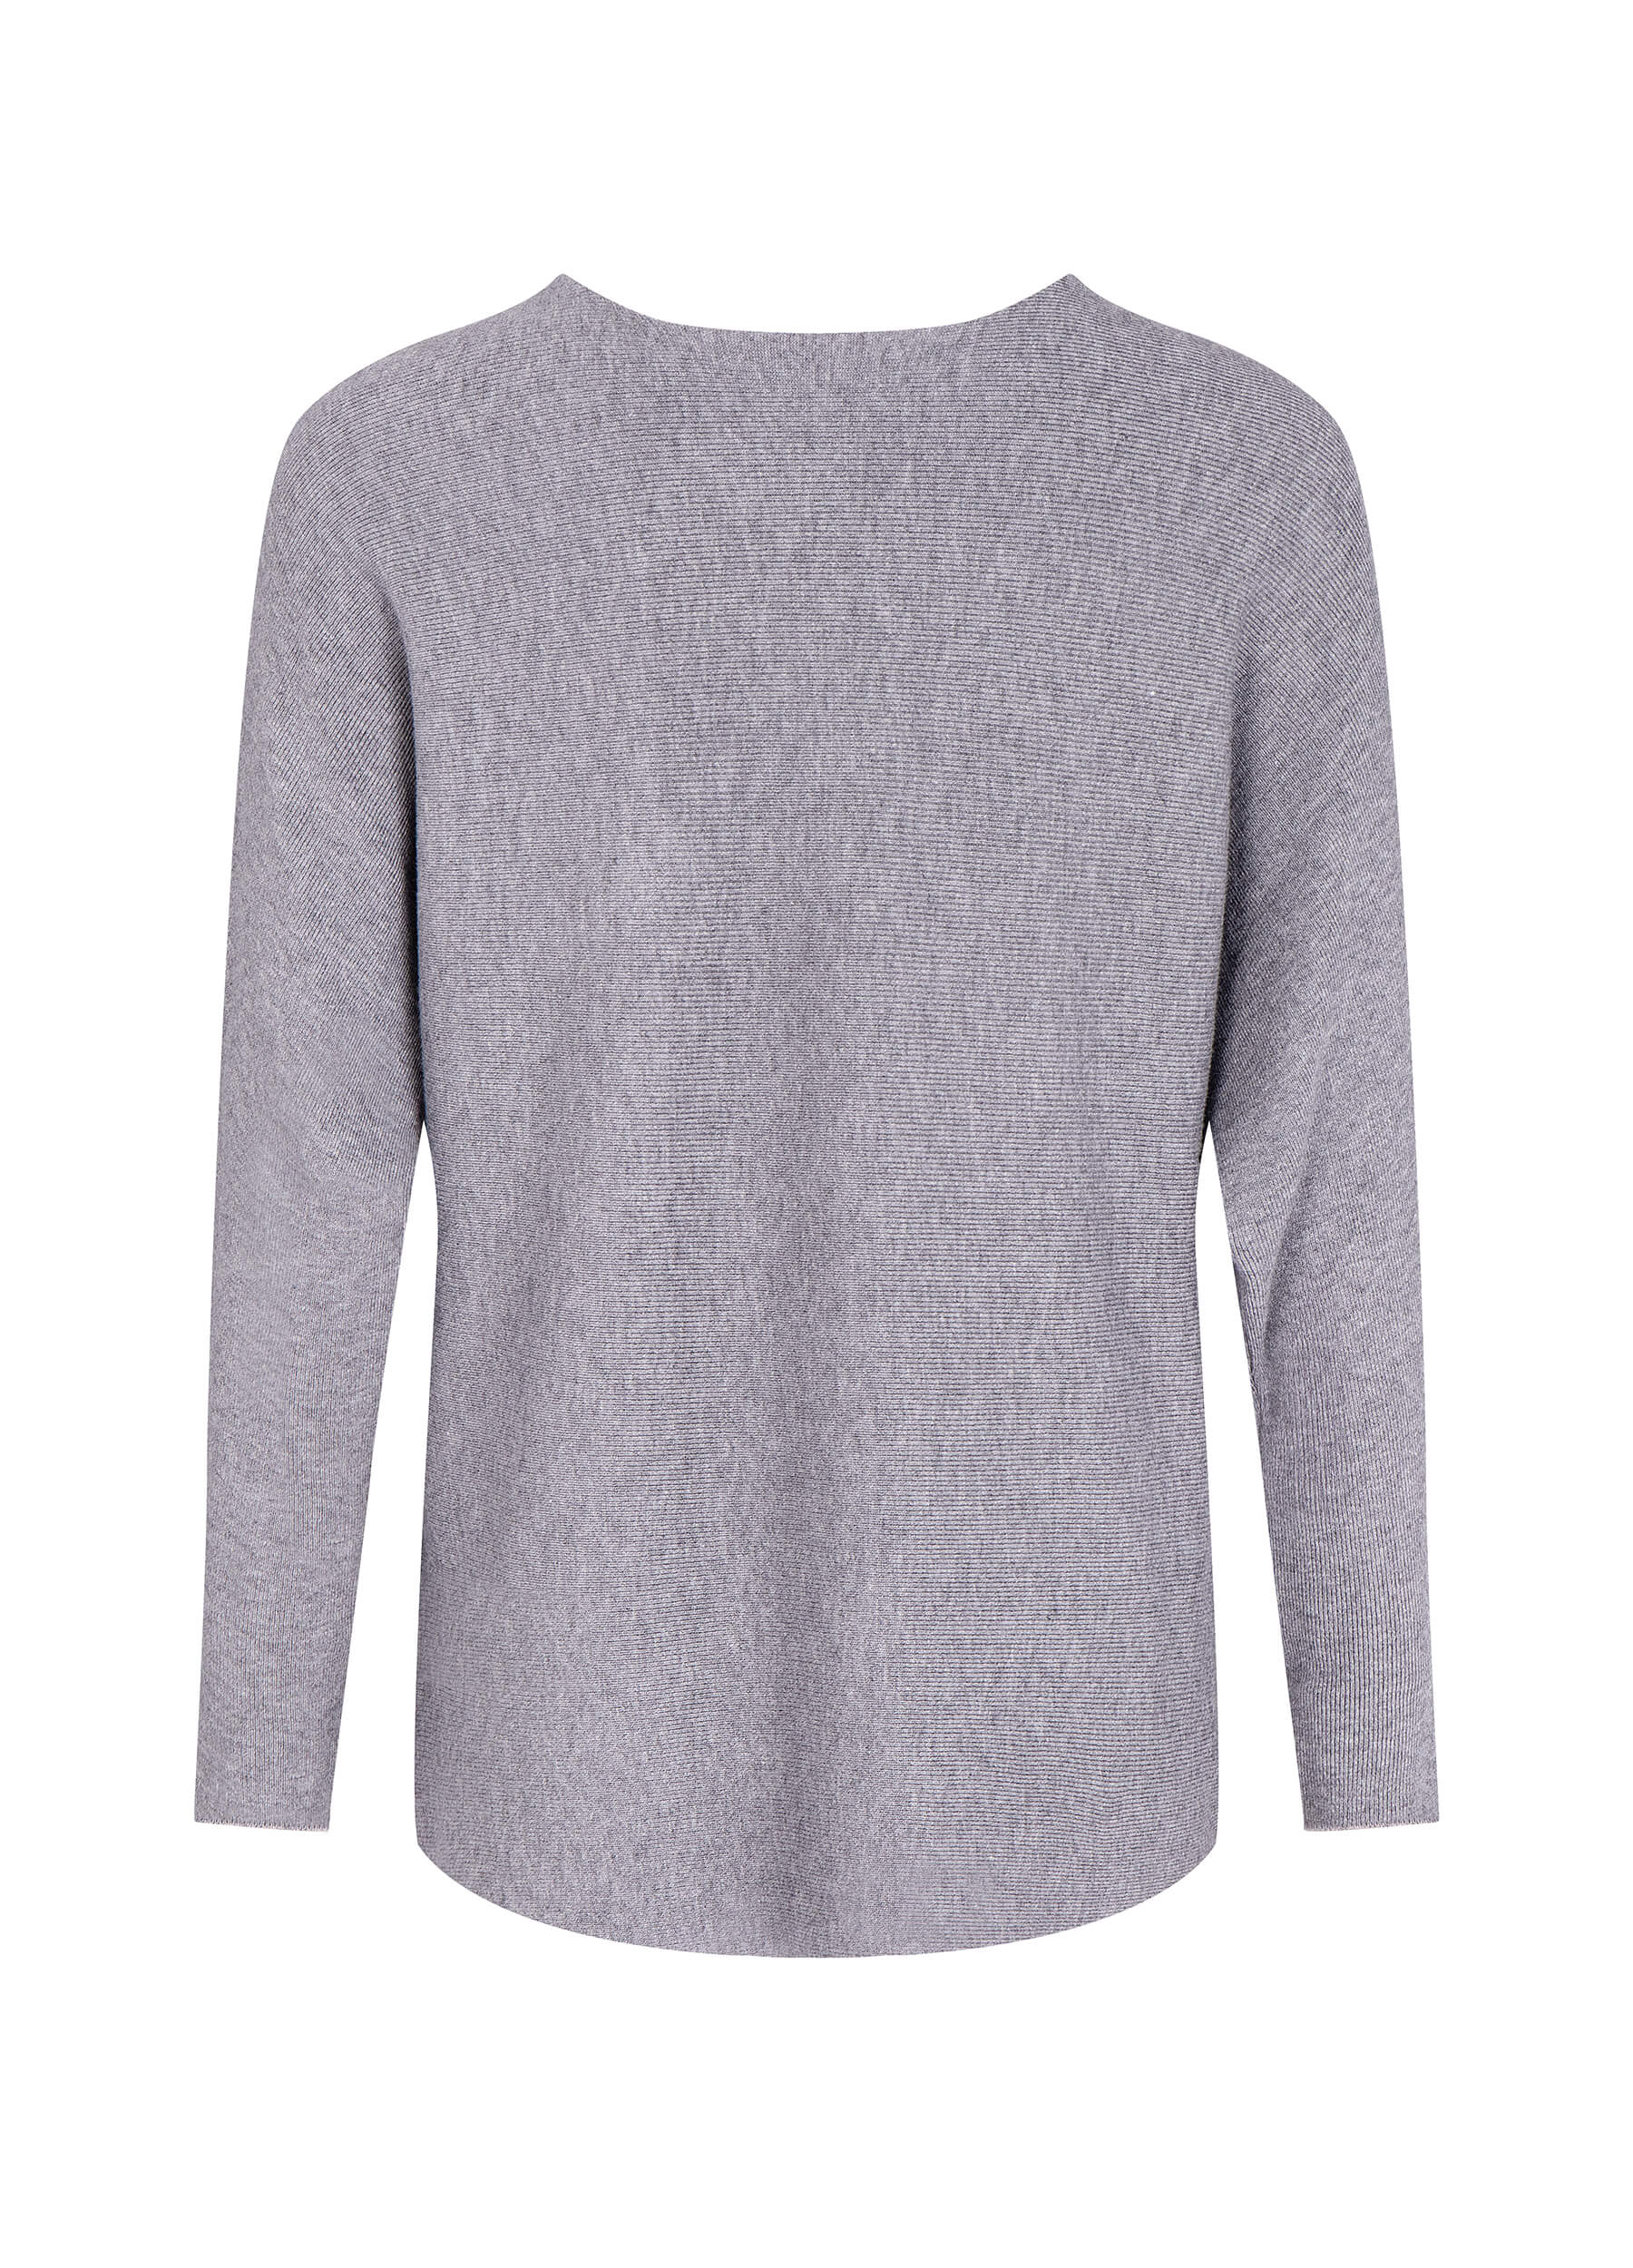 FINEPEEK Women's Fall Round Neck Drop Shoulder Long Sleeve Pullover Sweater-Grey